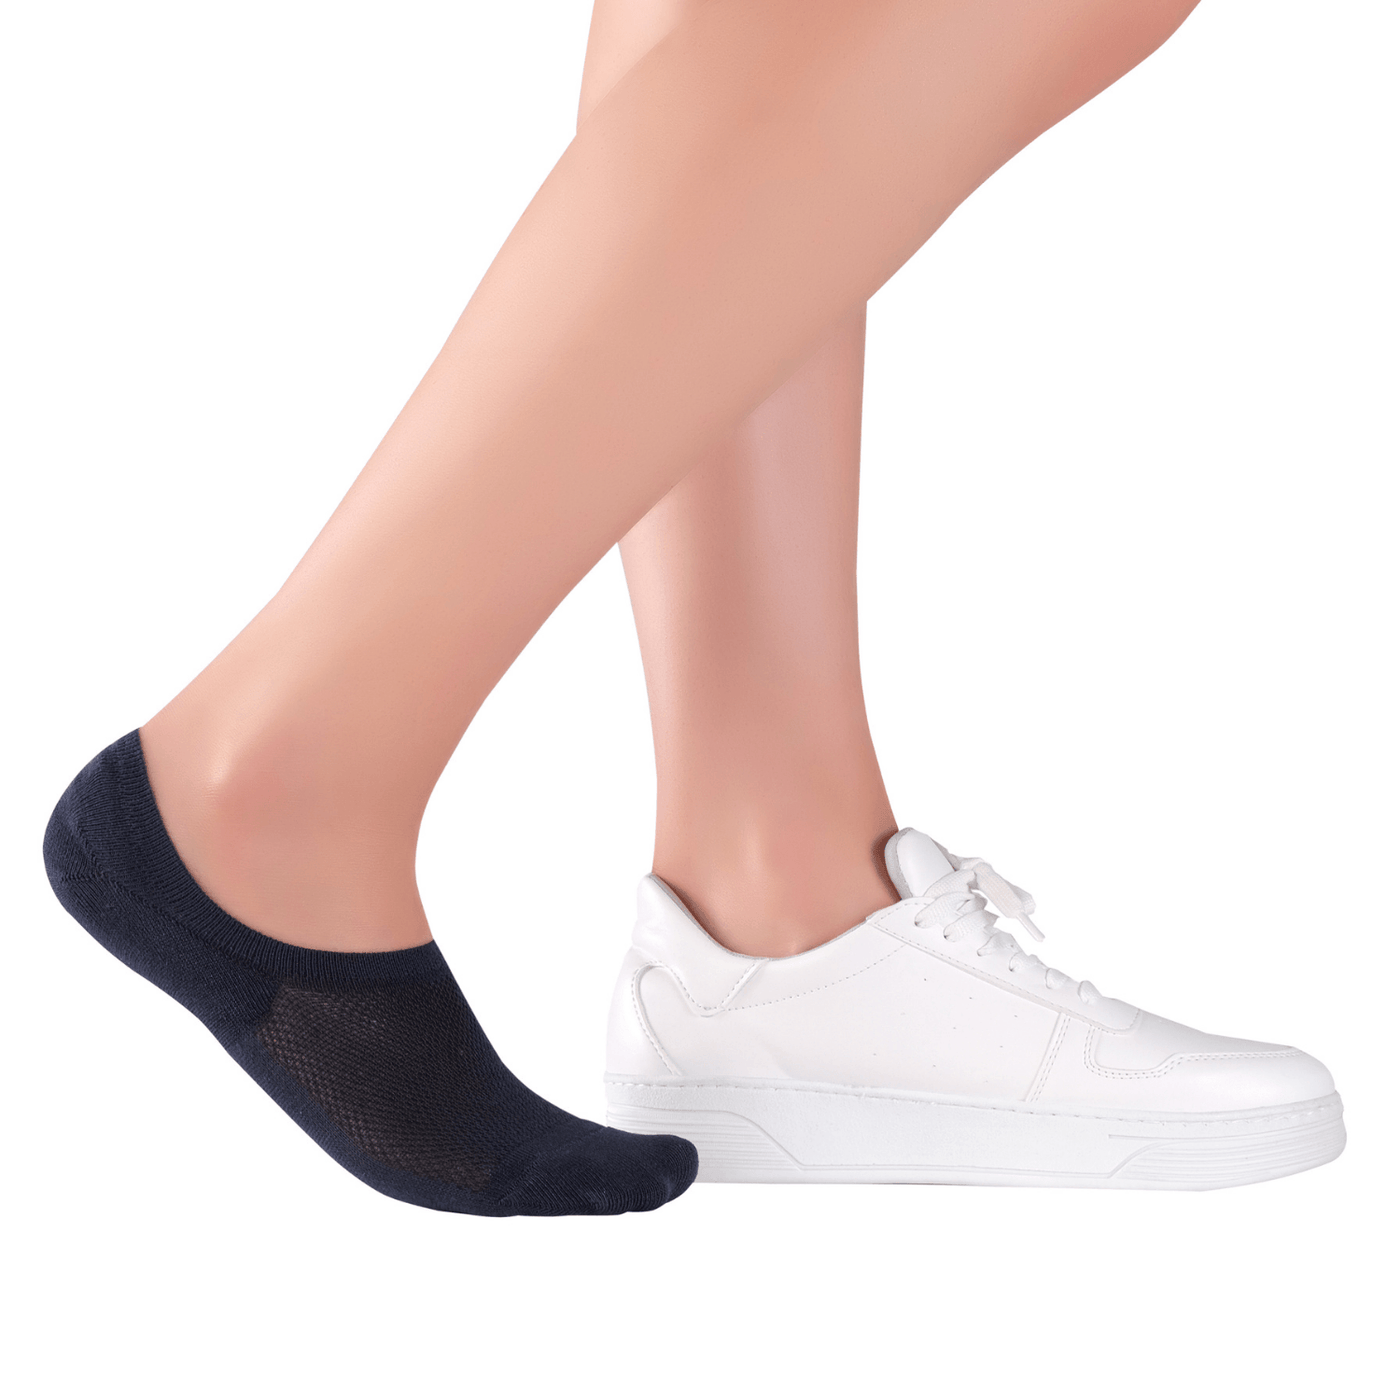 Elyfer-No-Show-Socks-for-Women#color_navy